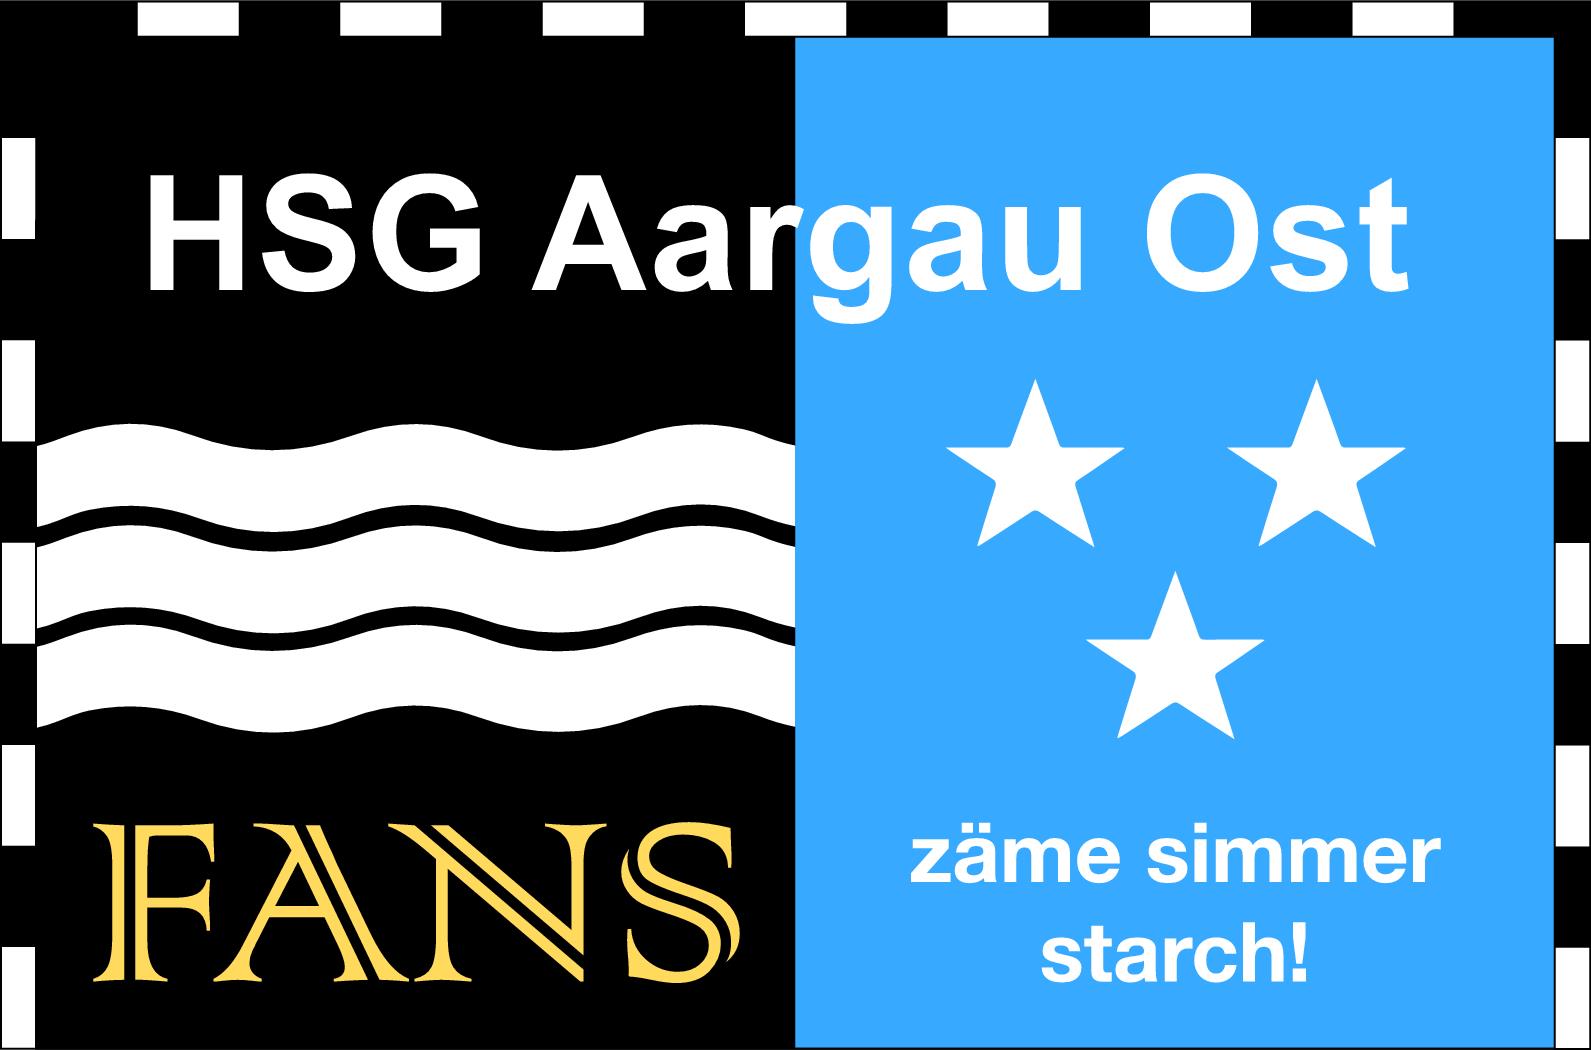 HSG Aargau Ost FANS